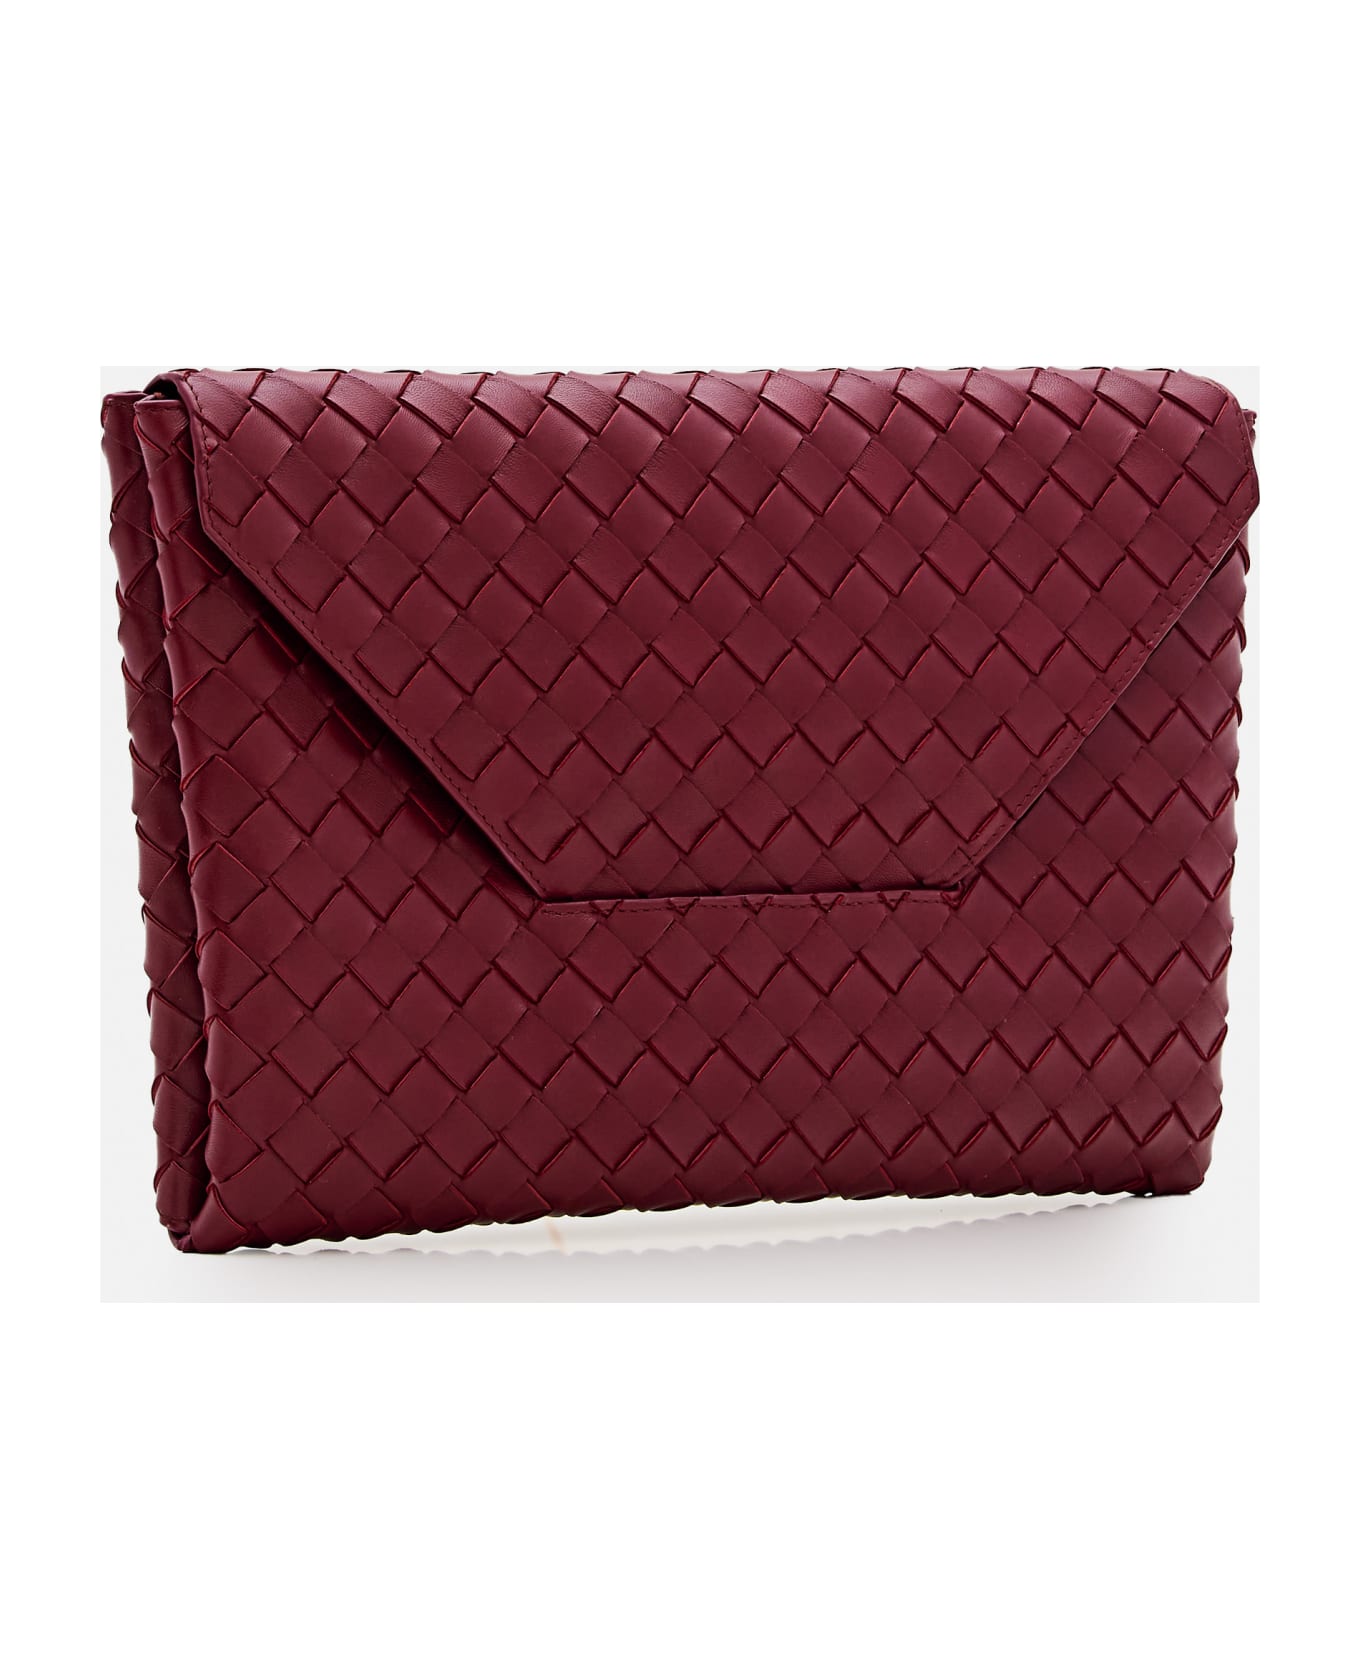 Bottega Veneta Origami Large Envelope Leather Bag - Red